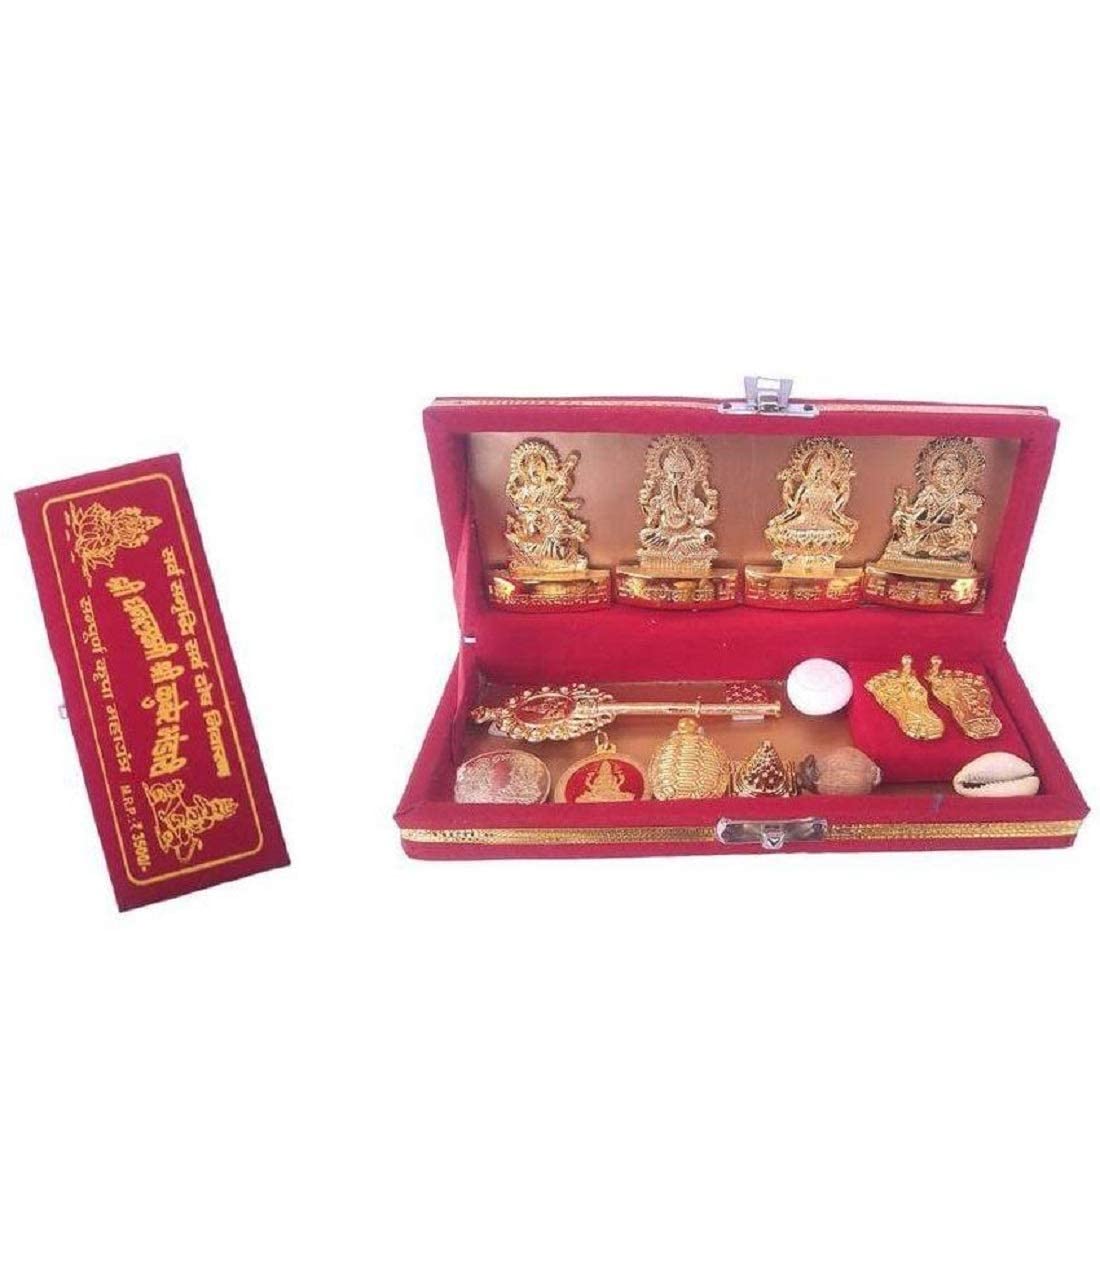 Pujahome Brass Shree Dhan Laxmi Kuber Bhandari Yantra Sarv Samriddhi Yantra Box (Golden)